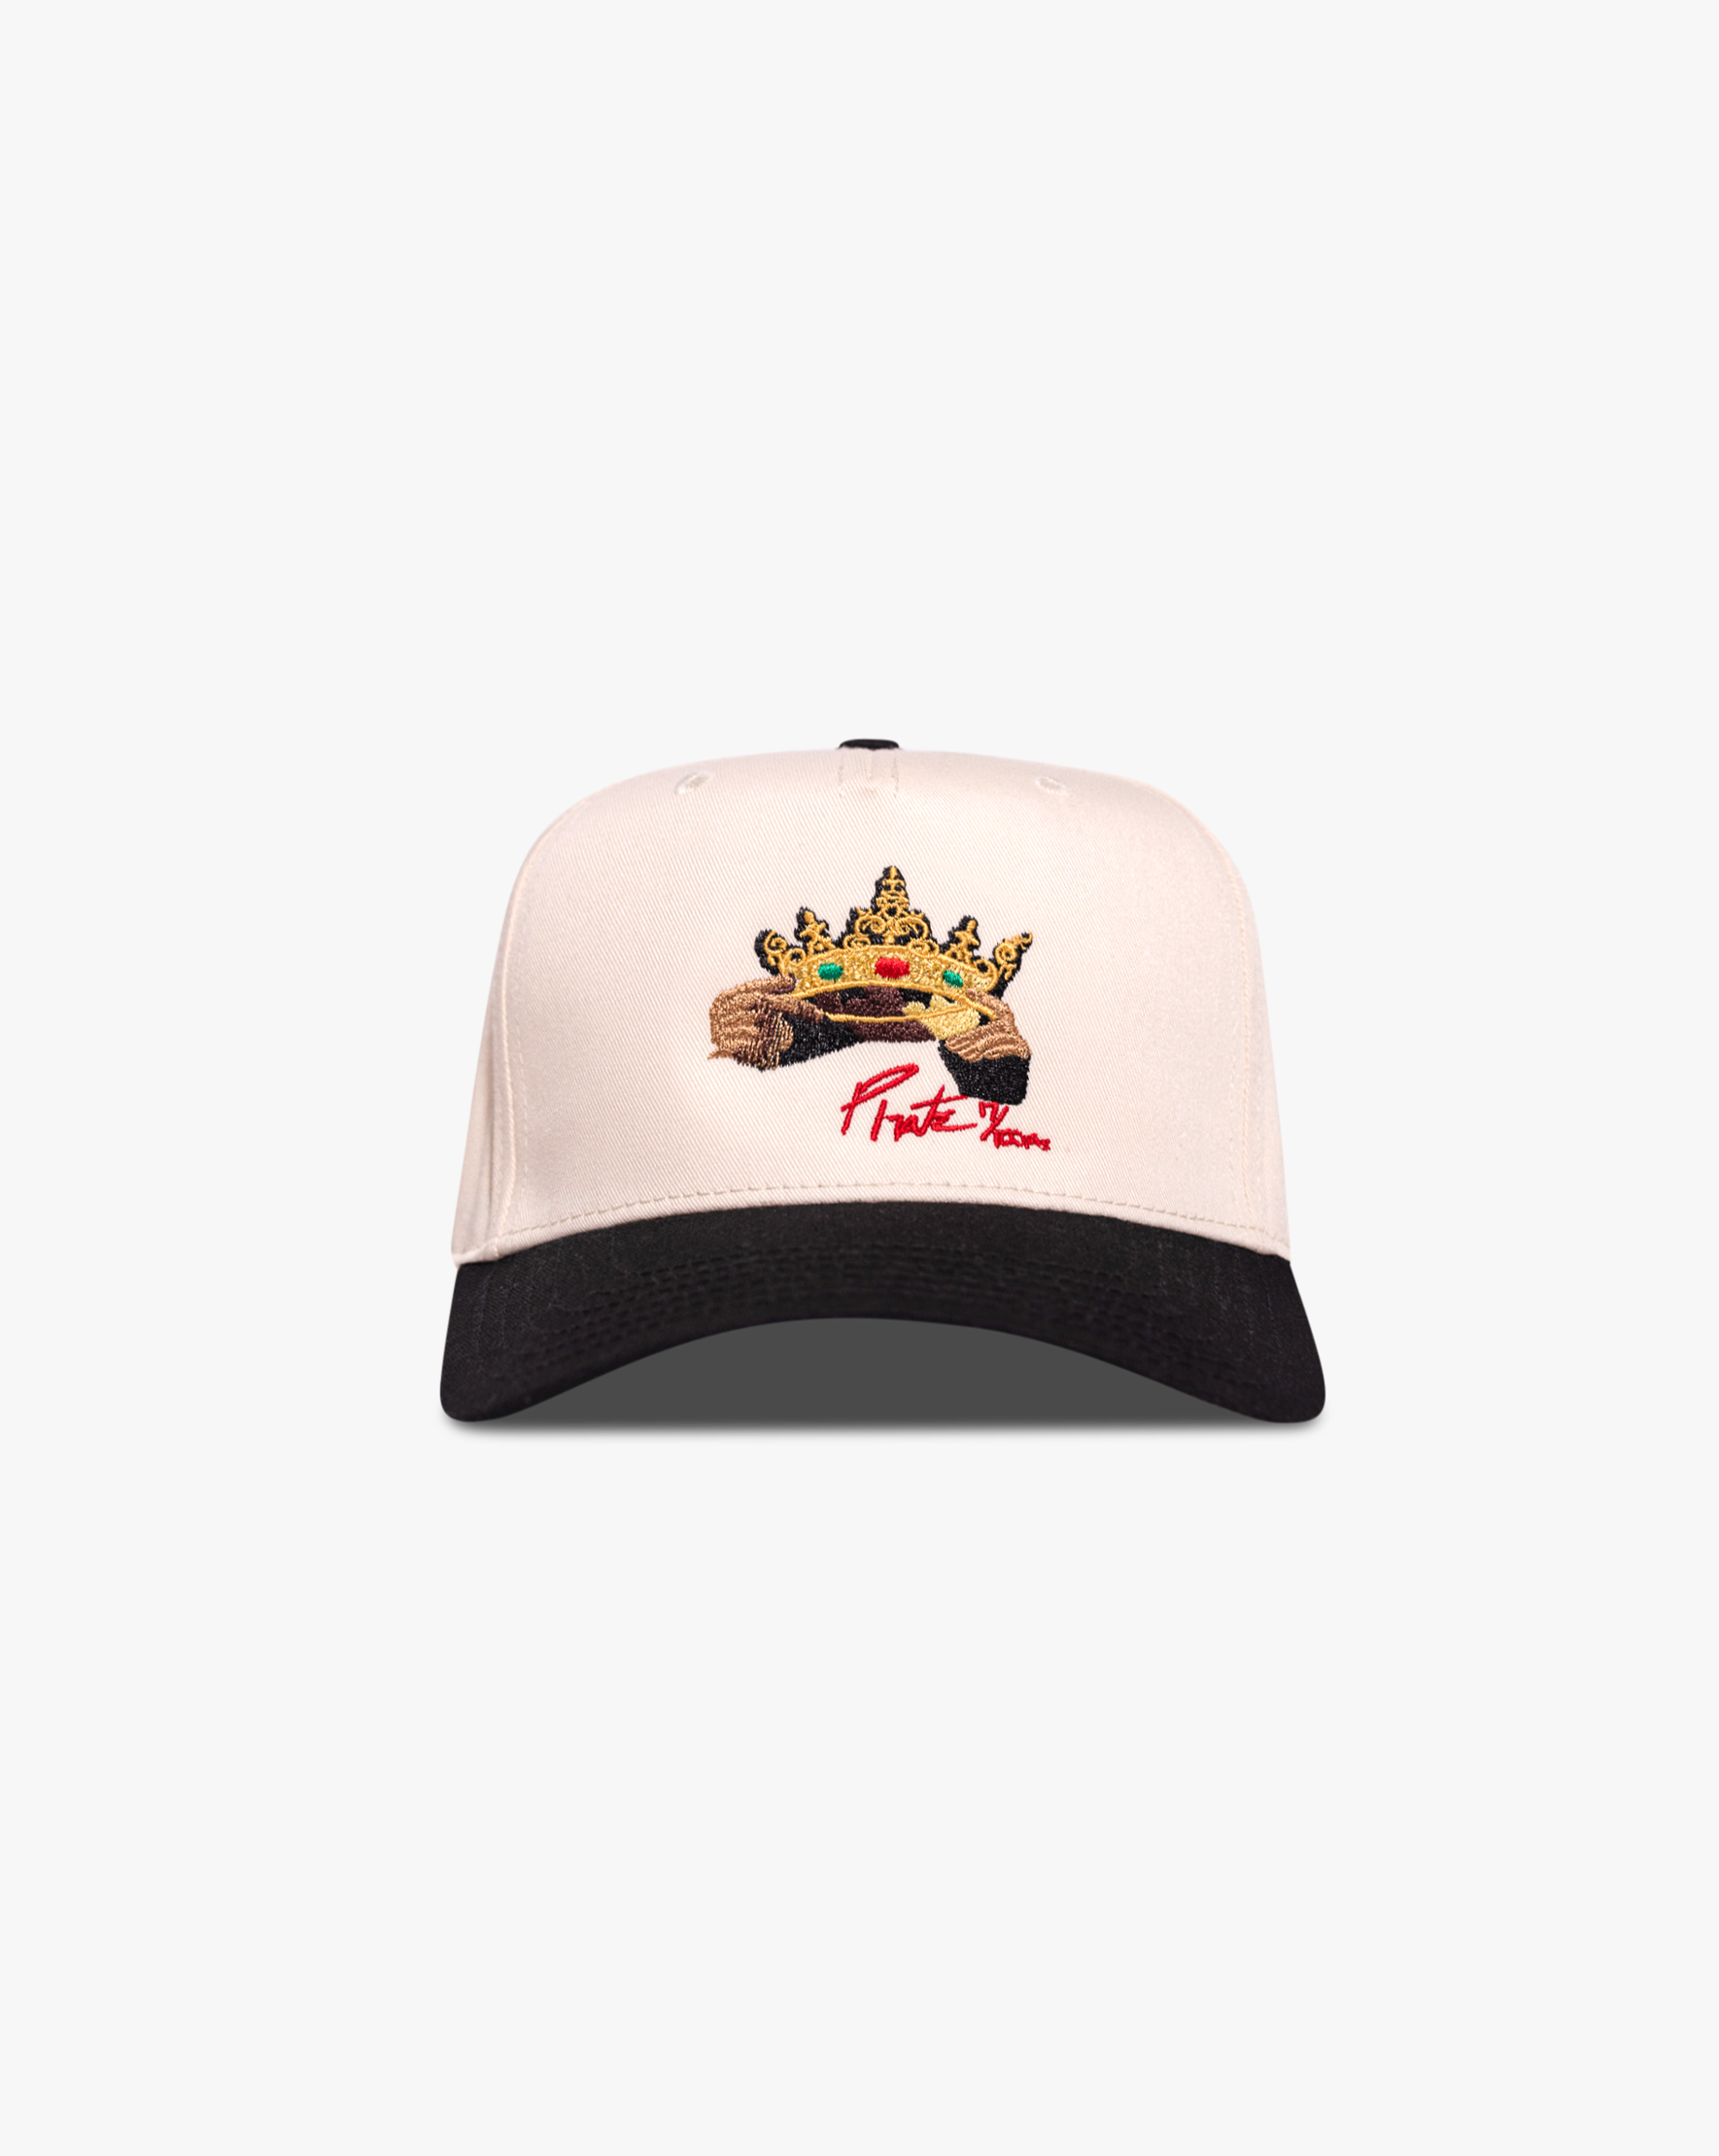 Pirate Castles Crown Hat (Cream/Black)